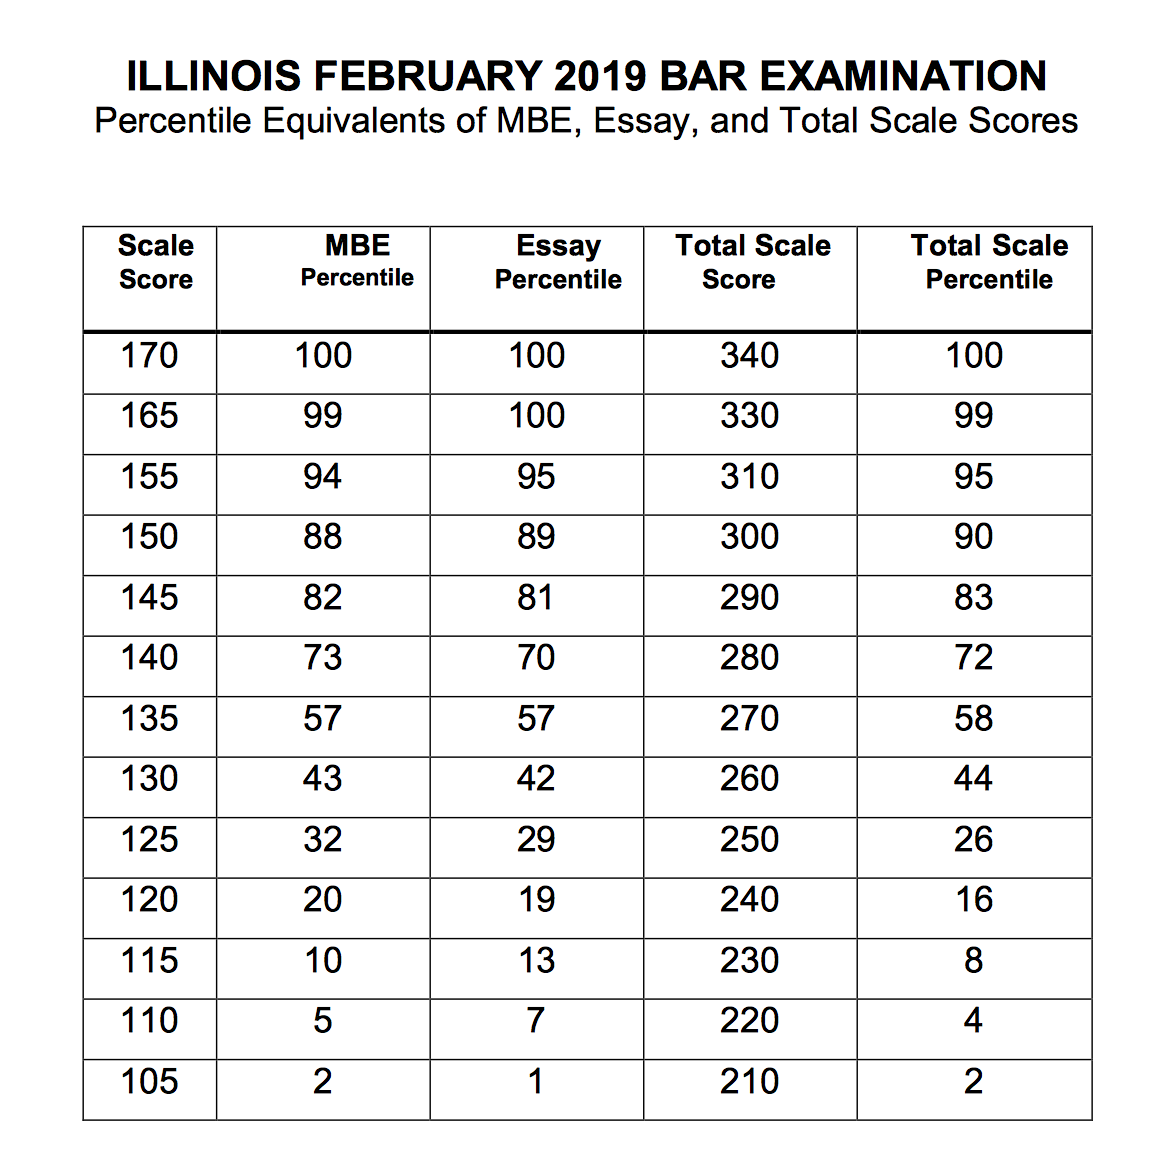 UBE percentile, illinois bar exam results released